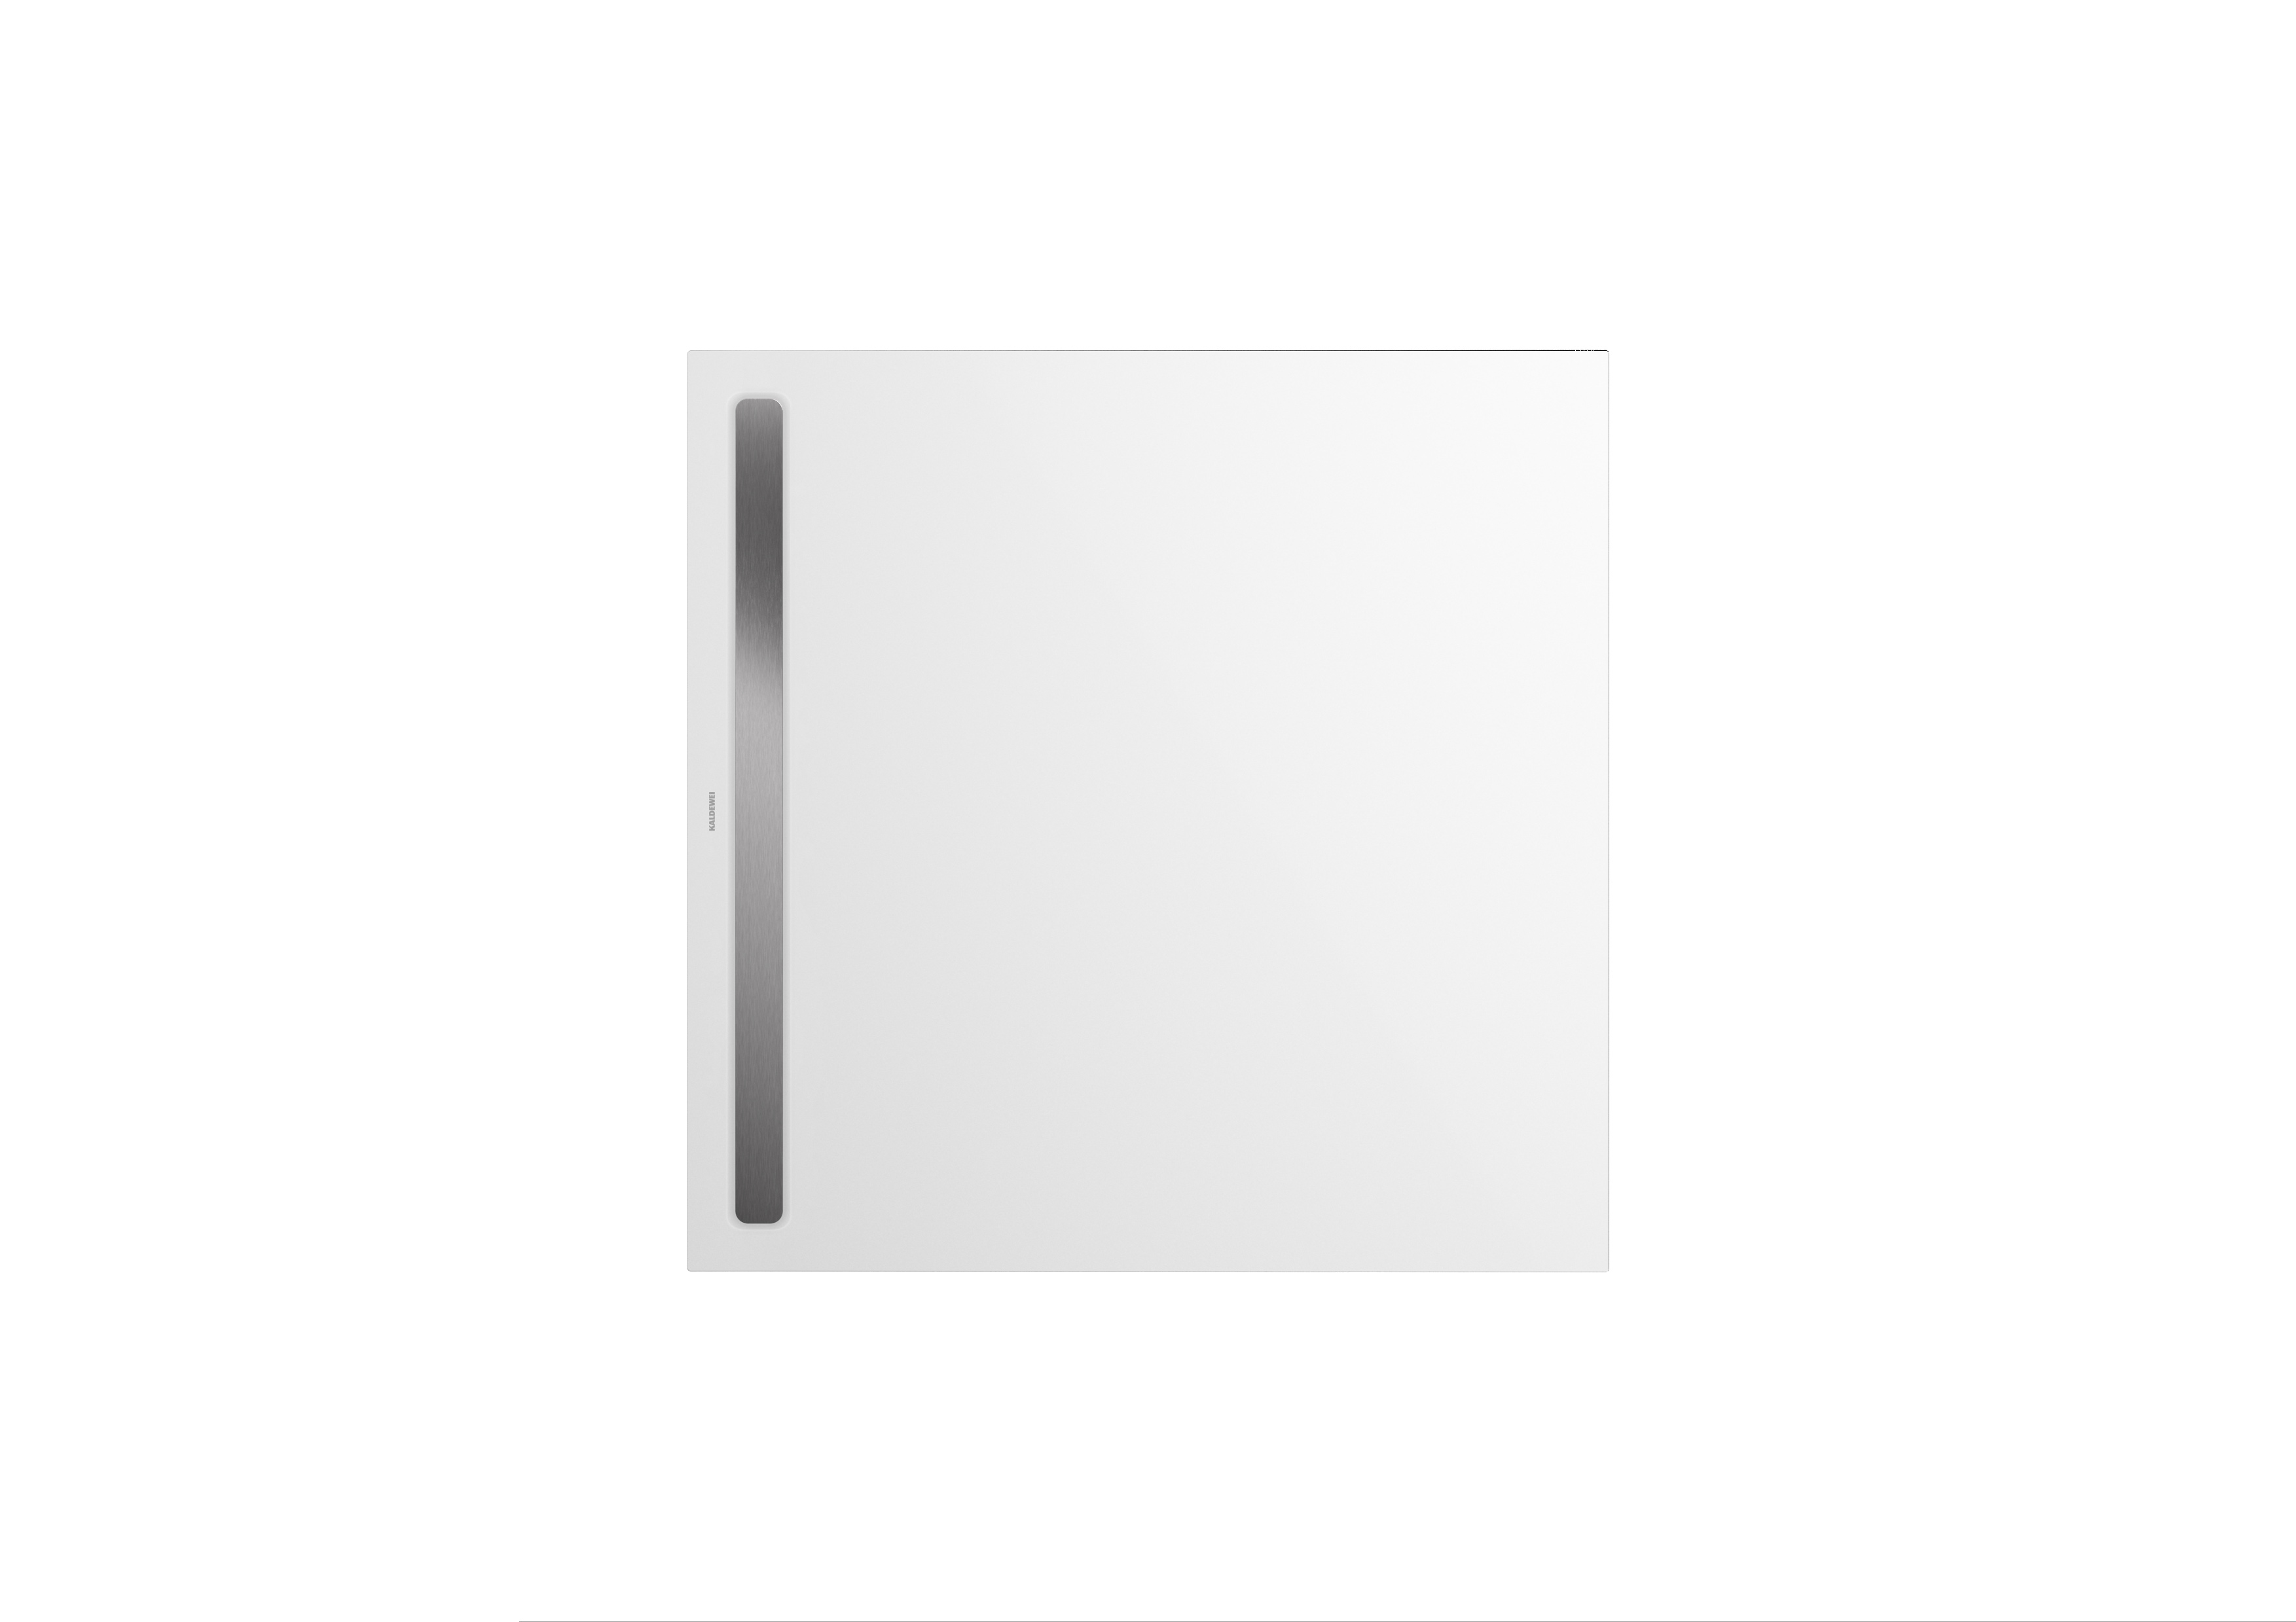 Kaldewei quadrat Duschwanne „Nexsys“ 80 × 80 cm in warm grey 90